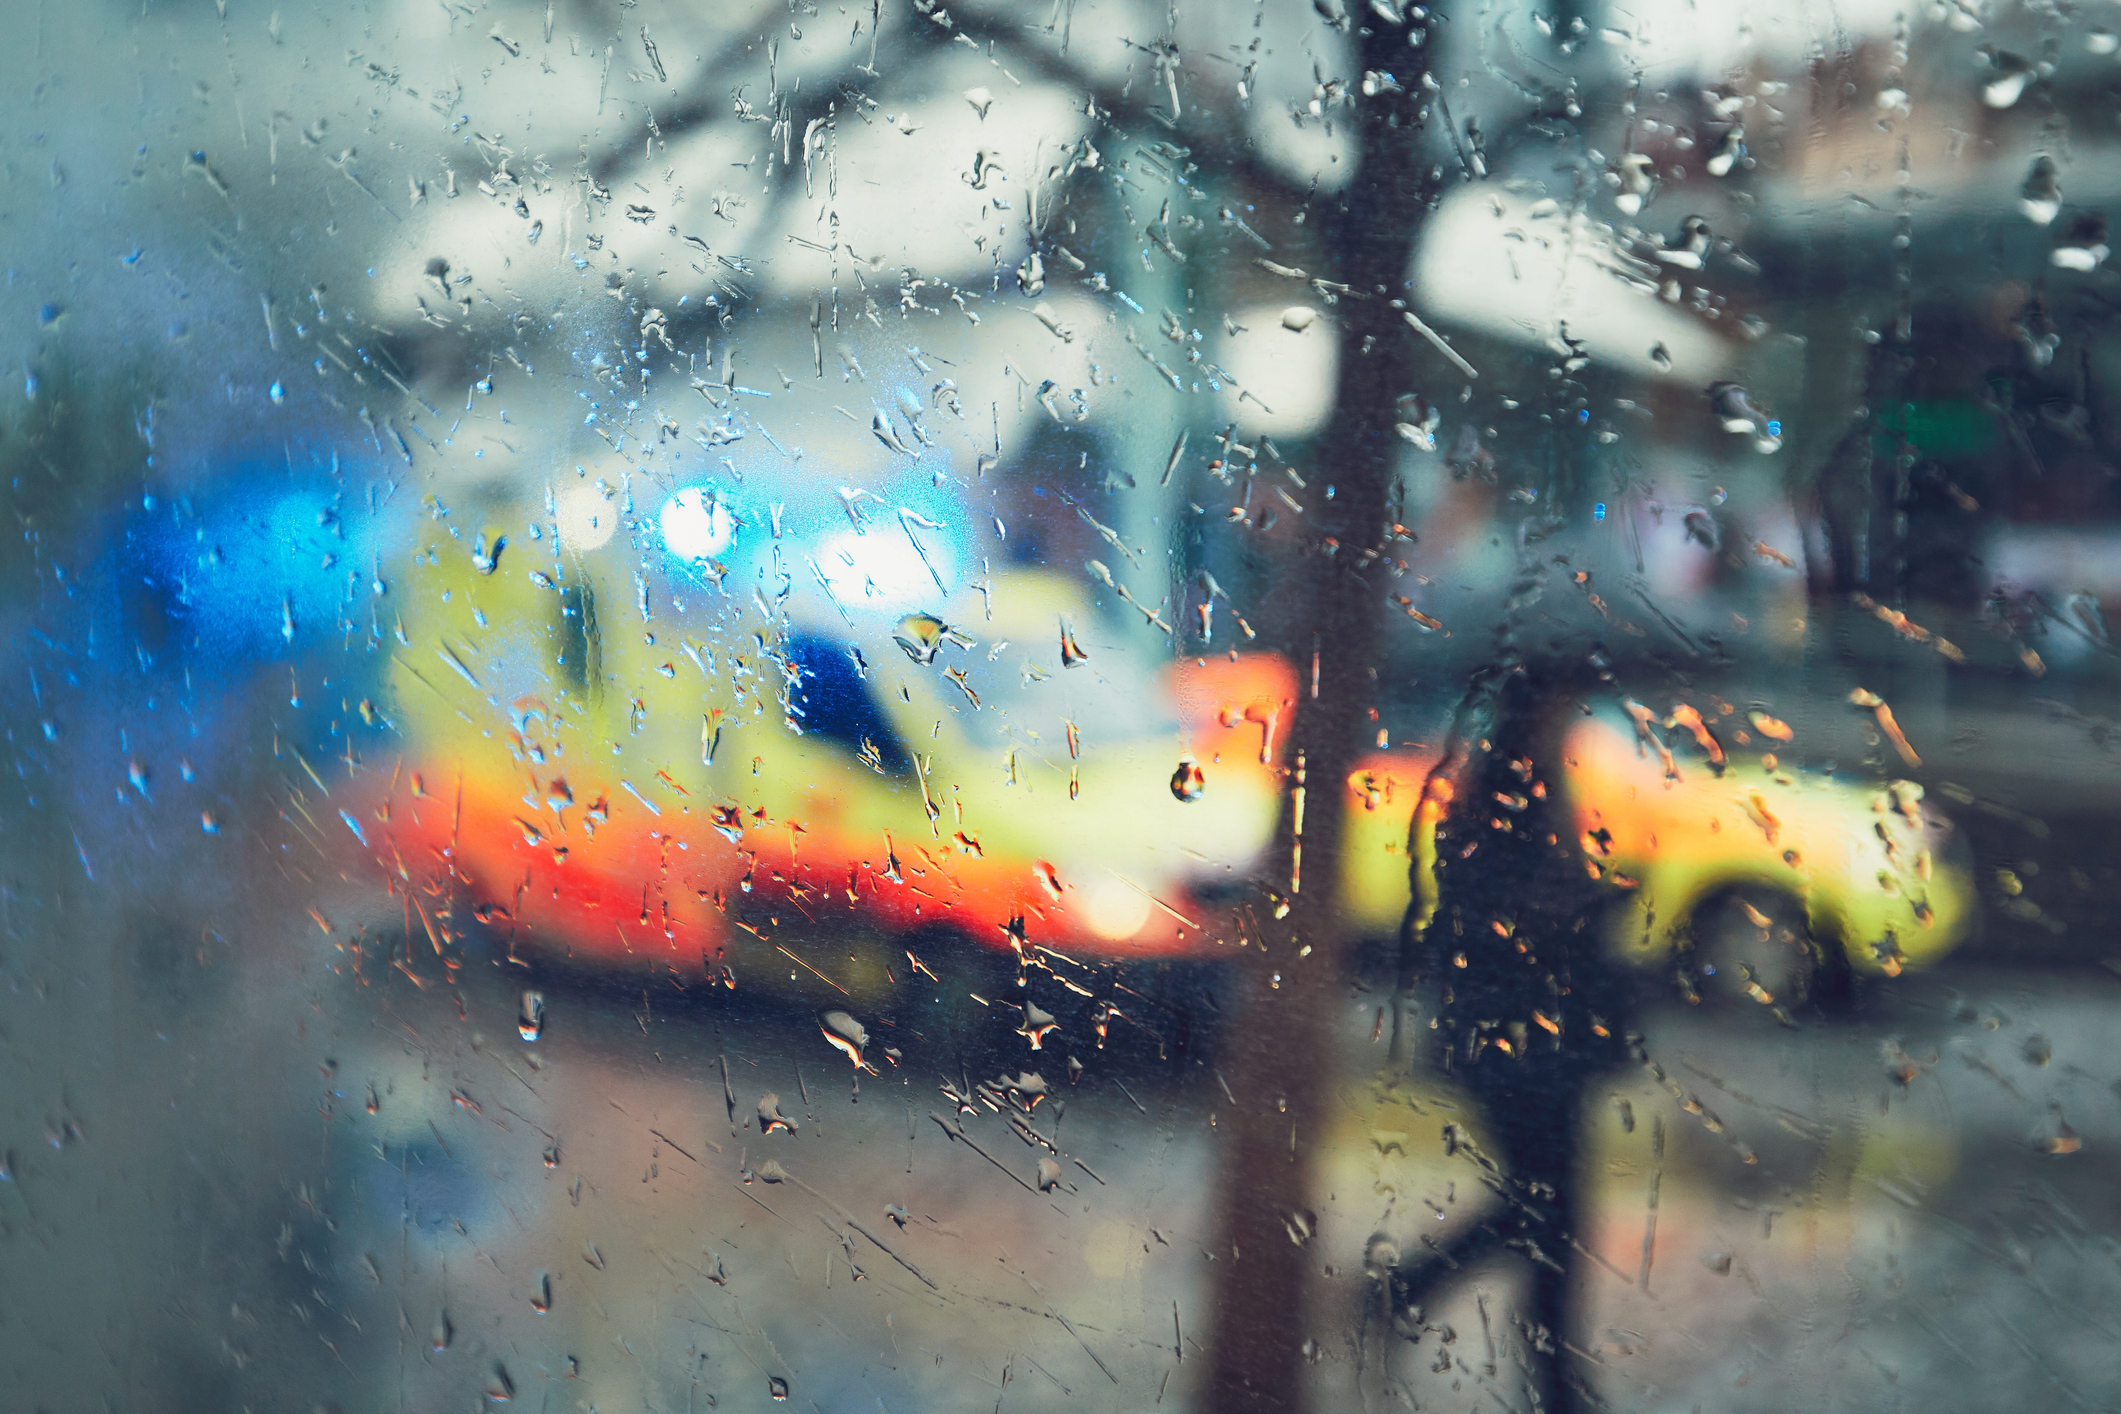 Emergency vehicles outside a rained on window